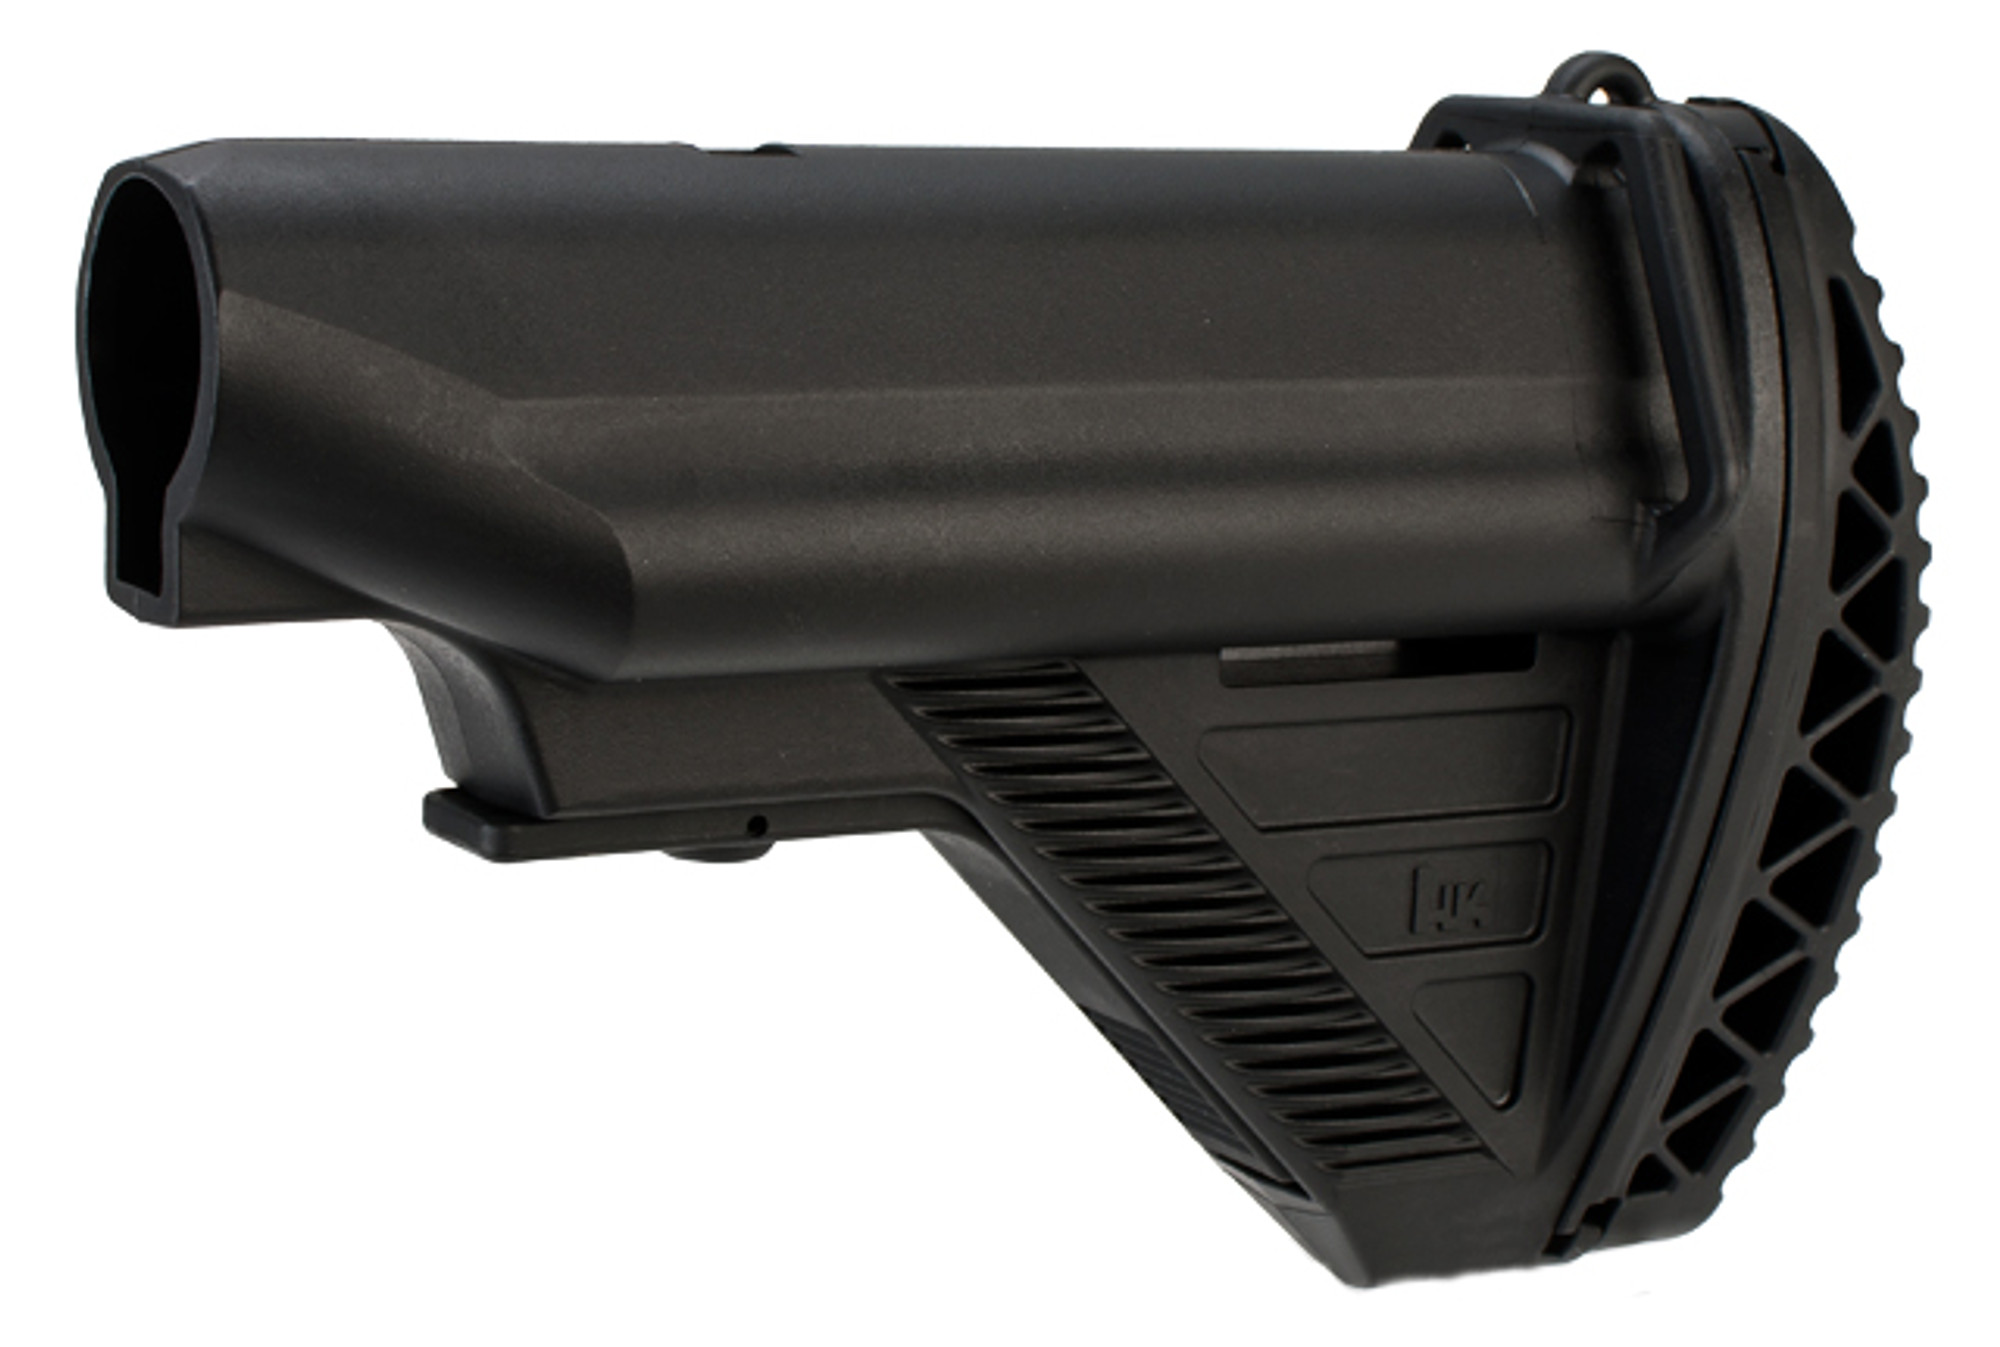 Umarex H&K 416 E1 Retractable Stock for 416 Series Airsoft Rifles - Black